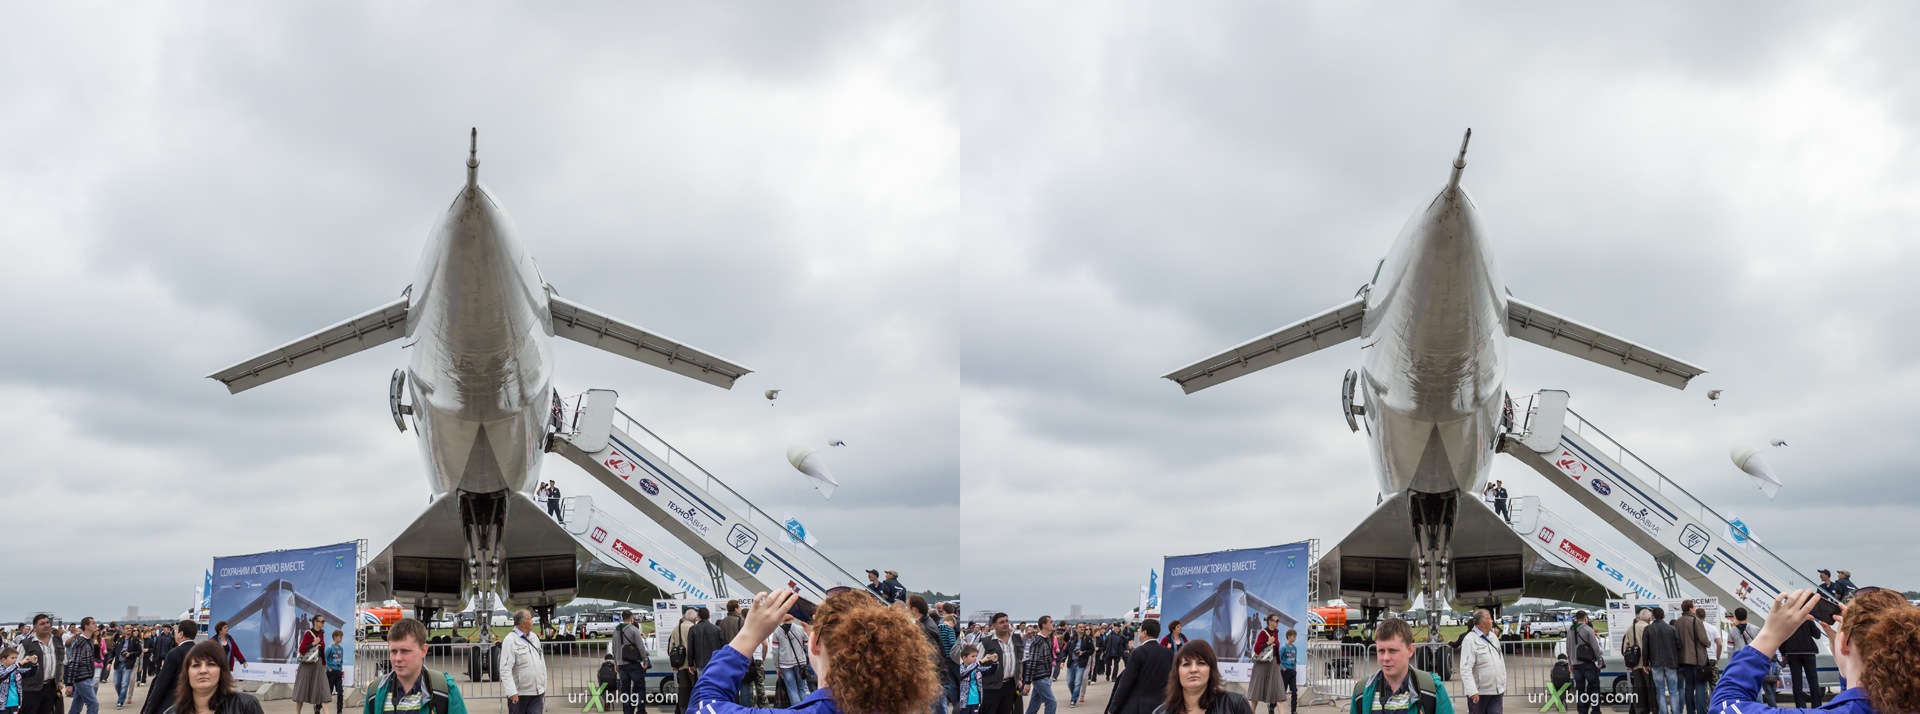 2013, Tu-144, MAKS, International Aviation and Space Salon, Russia, Ramenskoye airfield, airplane, 3D, stereo pair, cross-eyed, crossview, cross view stereo pair, stereoscopic